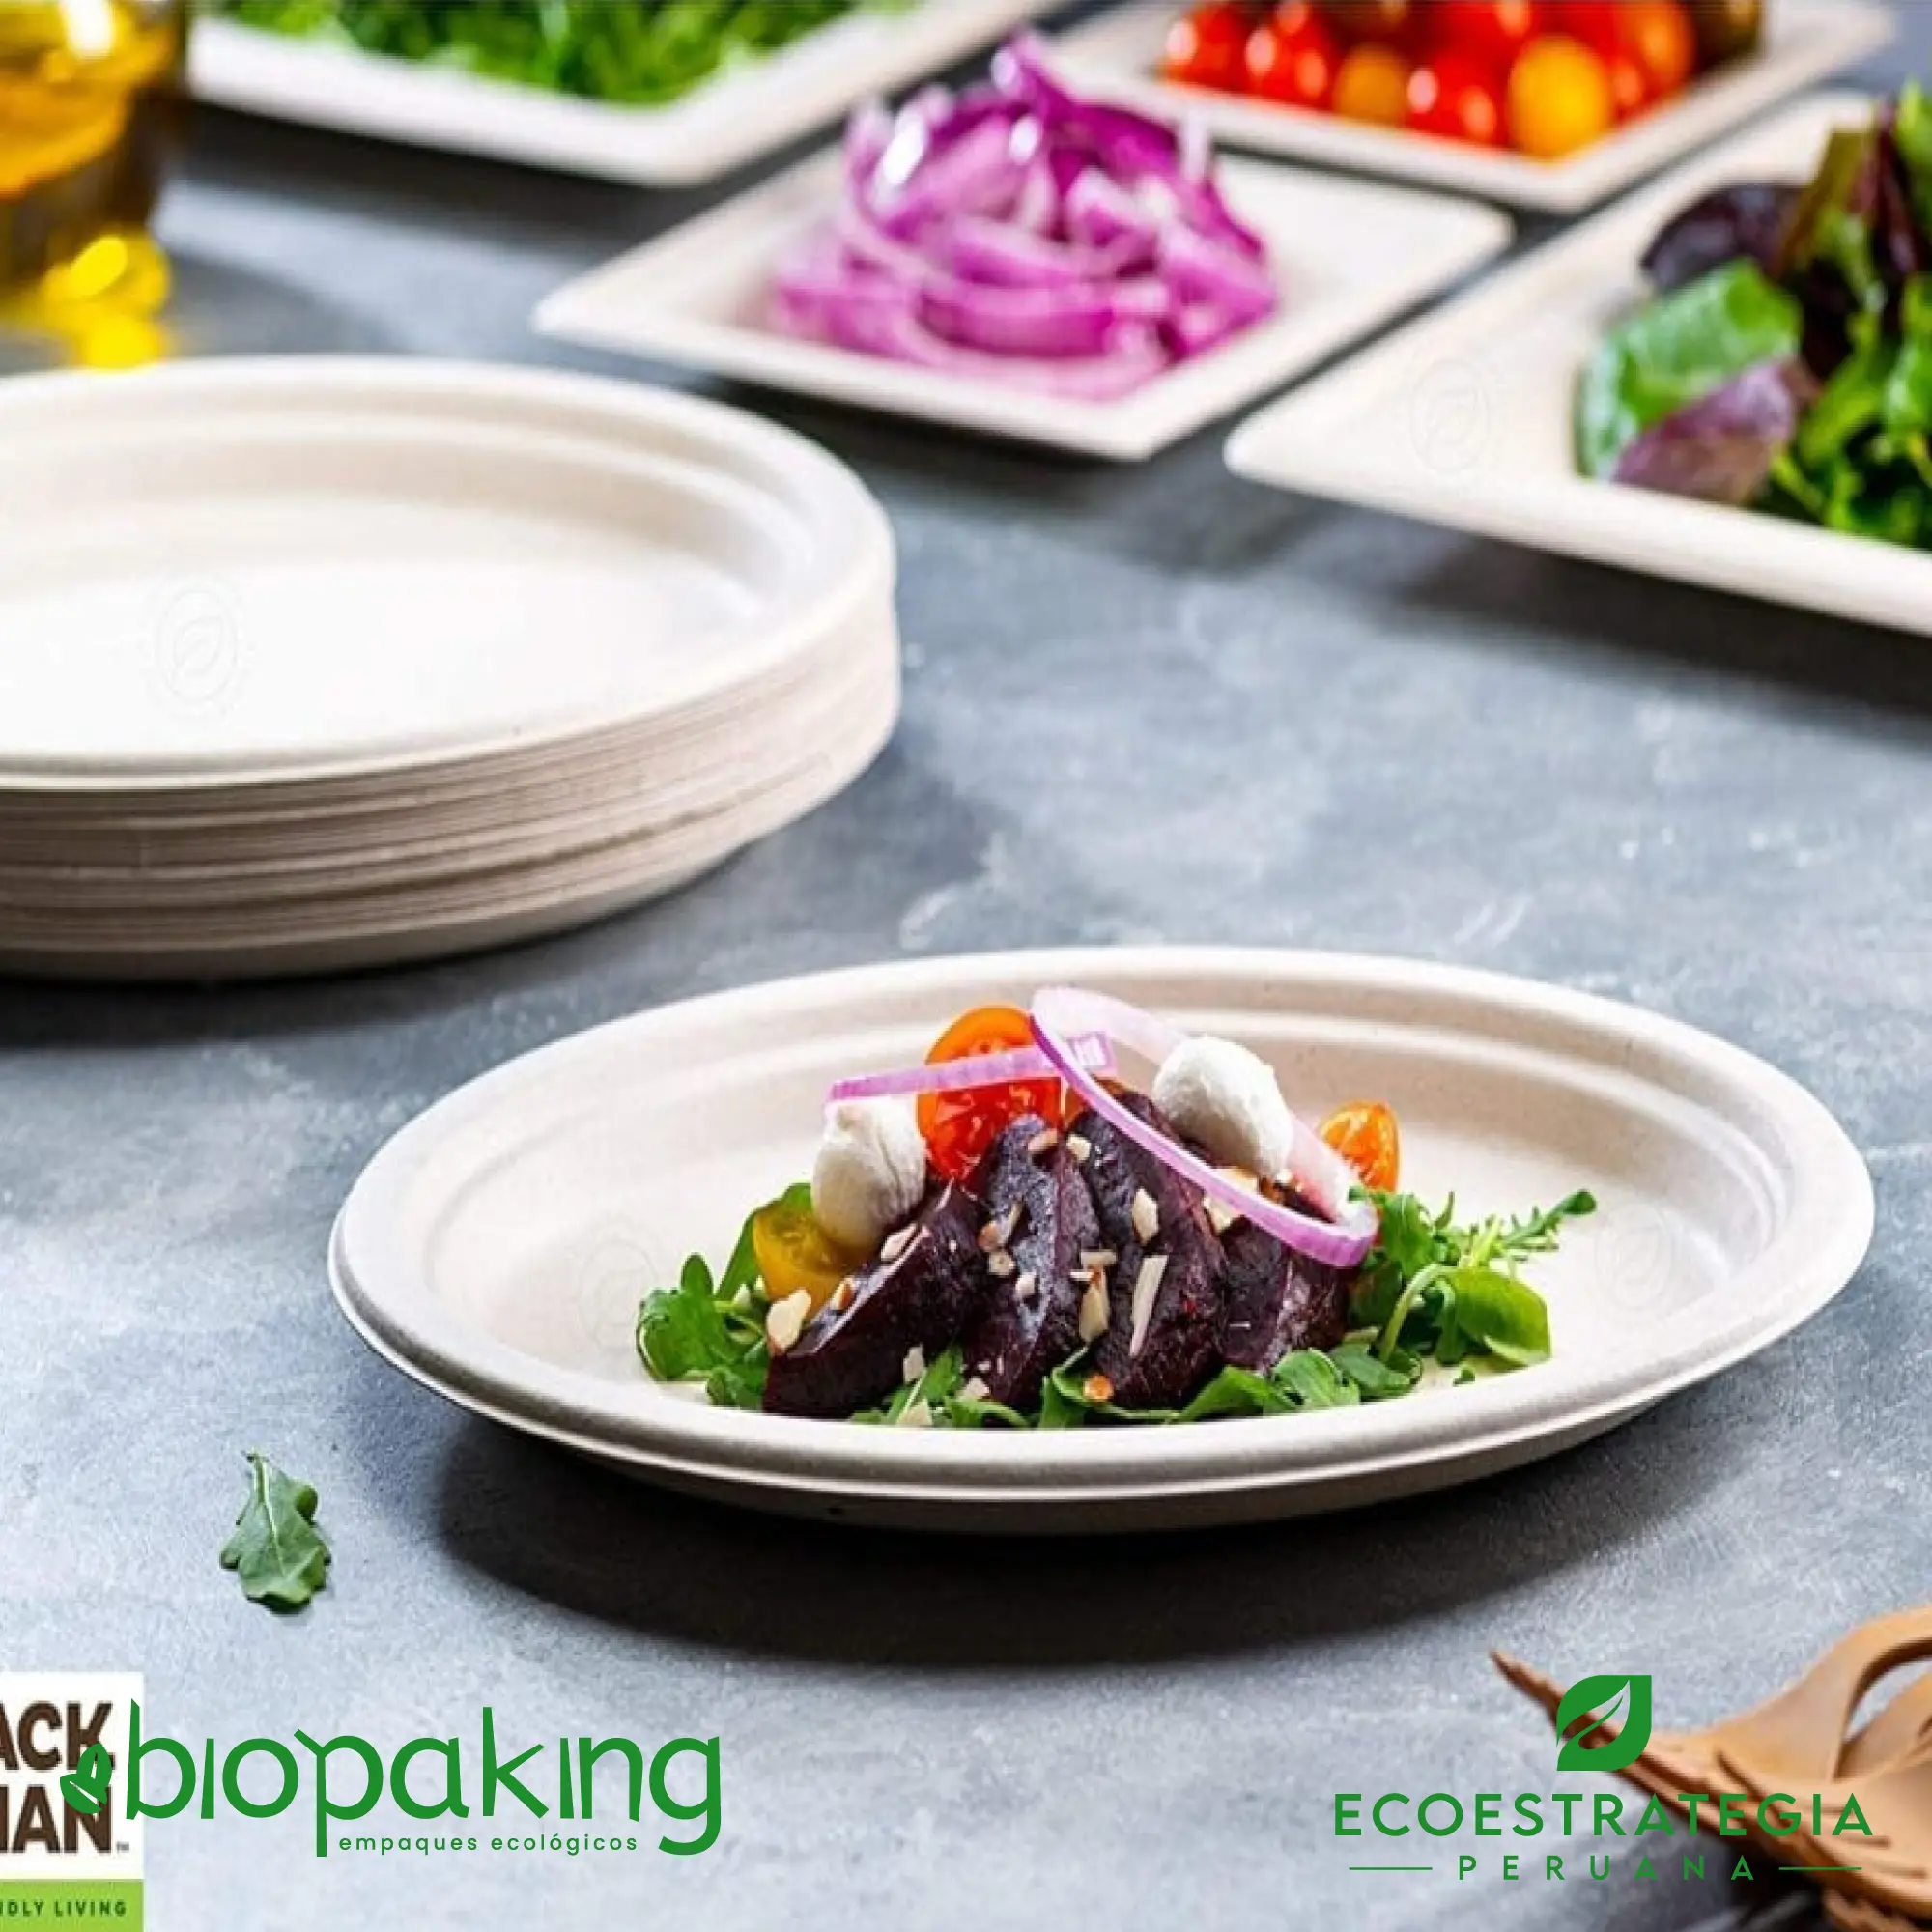 Este plato biodegradable tiene una medida de 15cm. Envase biodegradable a base del bagazo de fibra de caña de azúcar, empaques de gramaje ideal para comidas